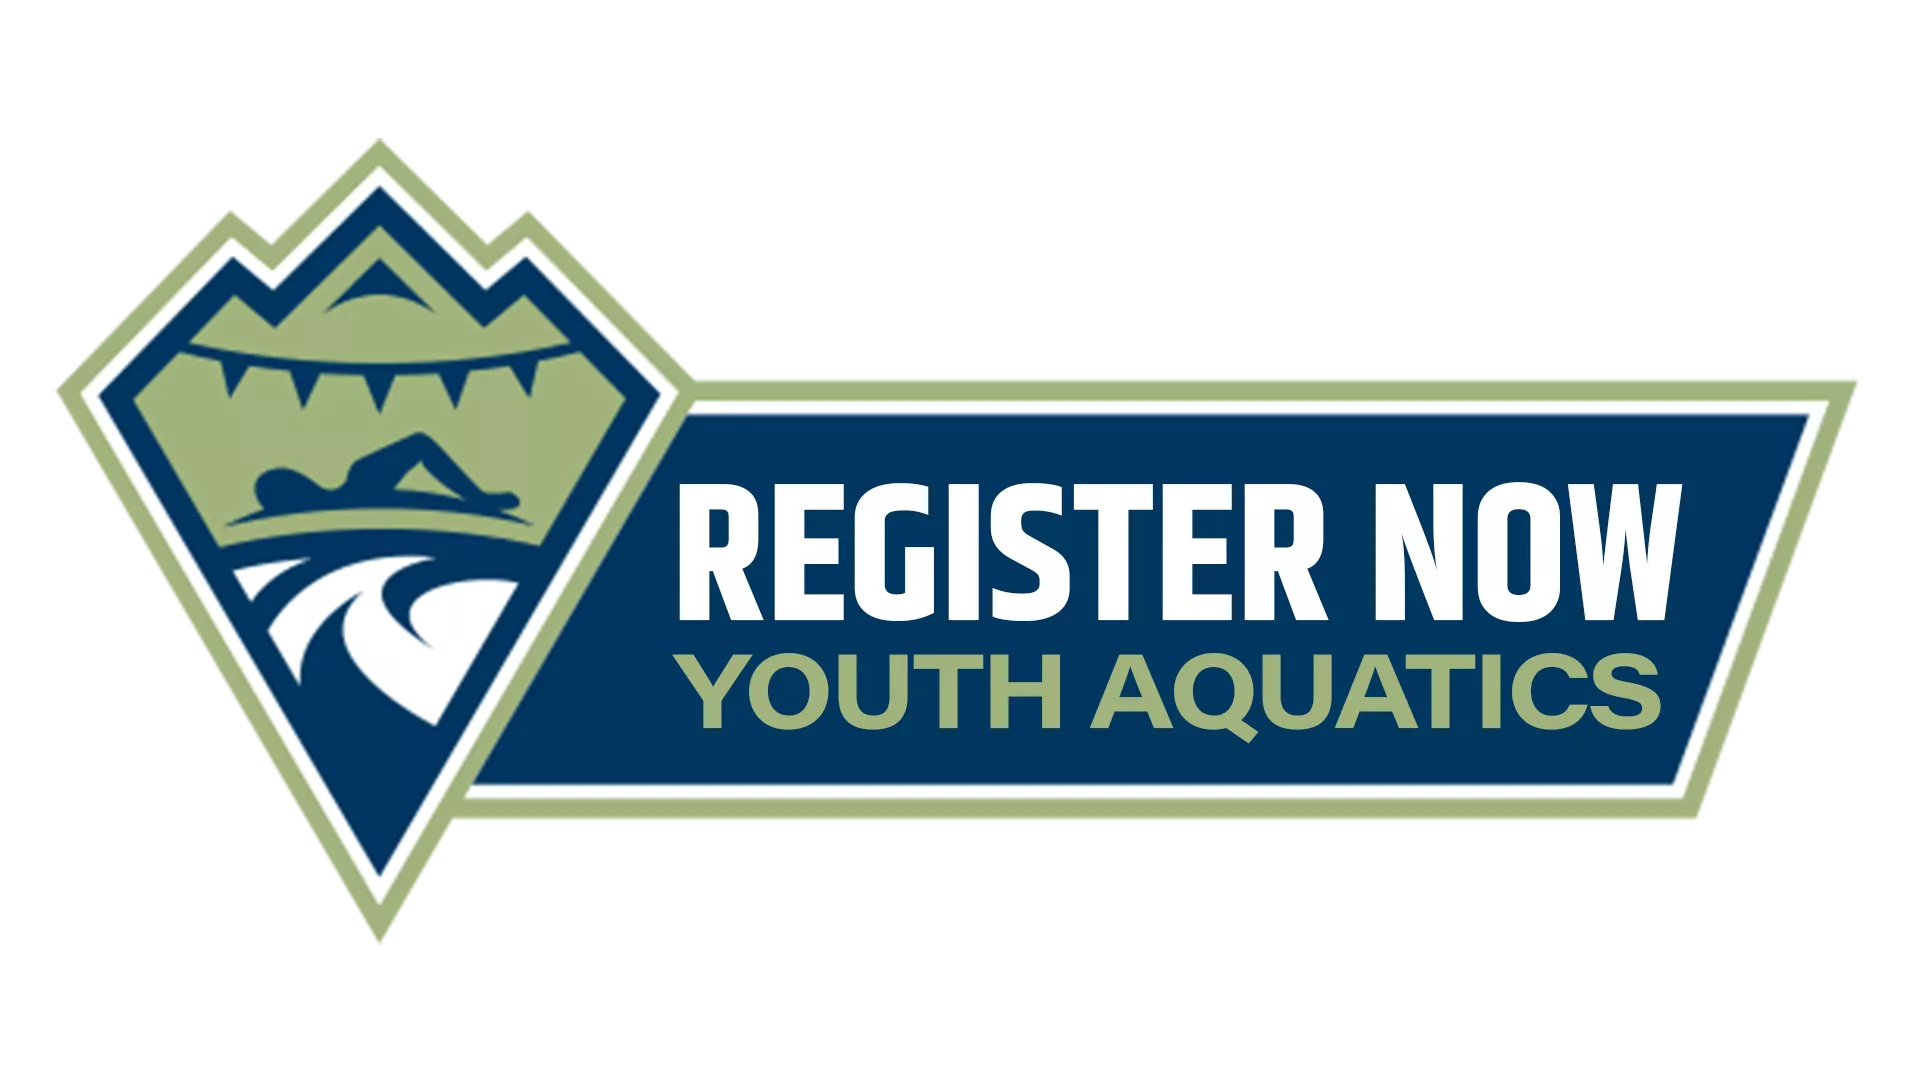 Aquatic register now youth